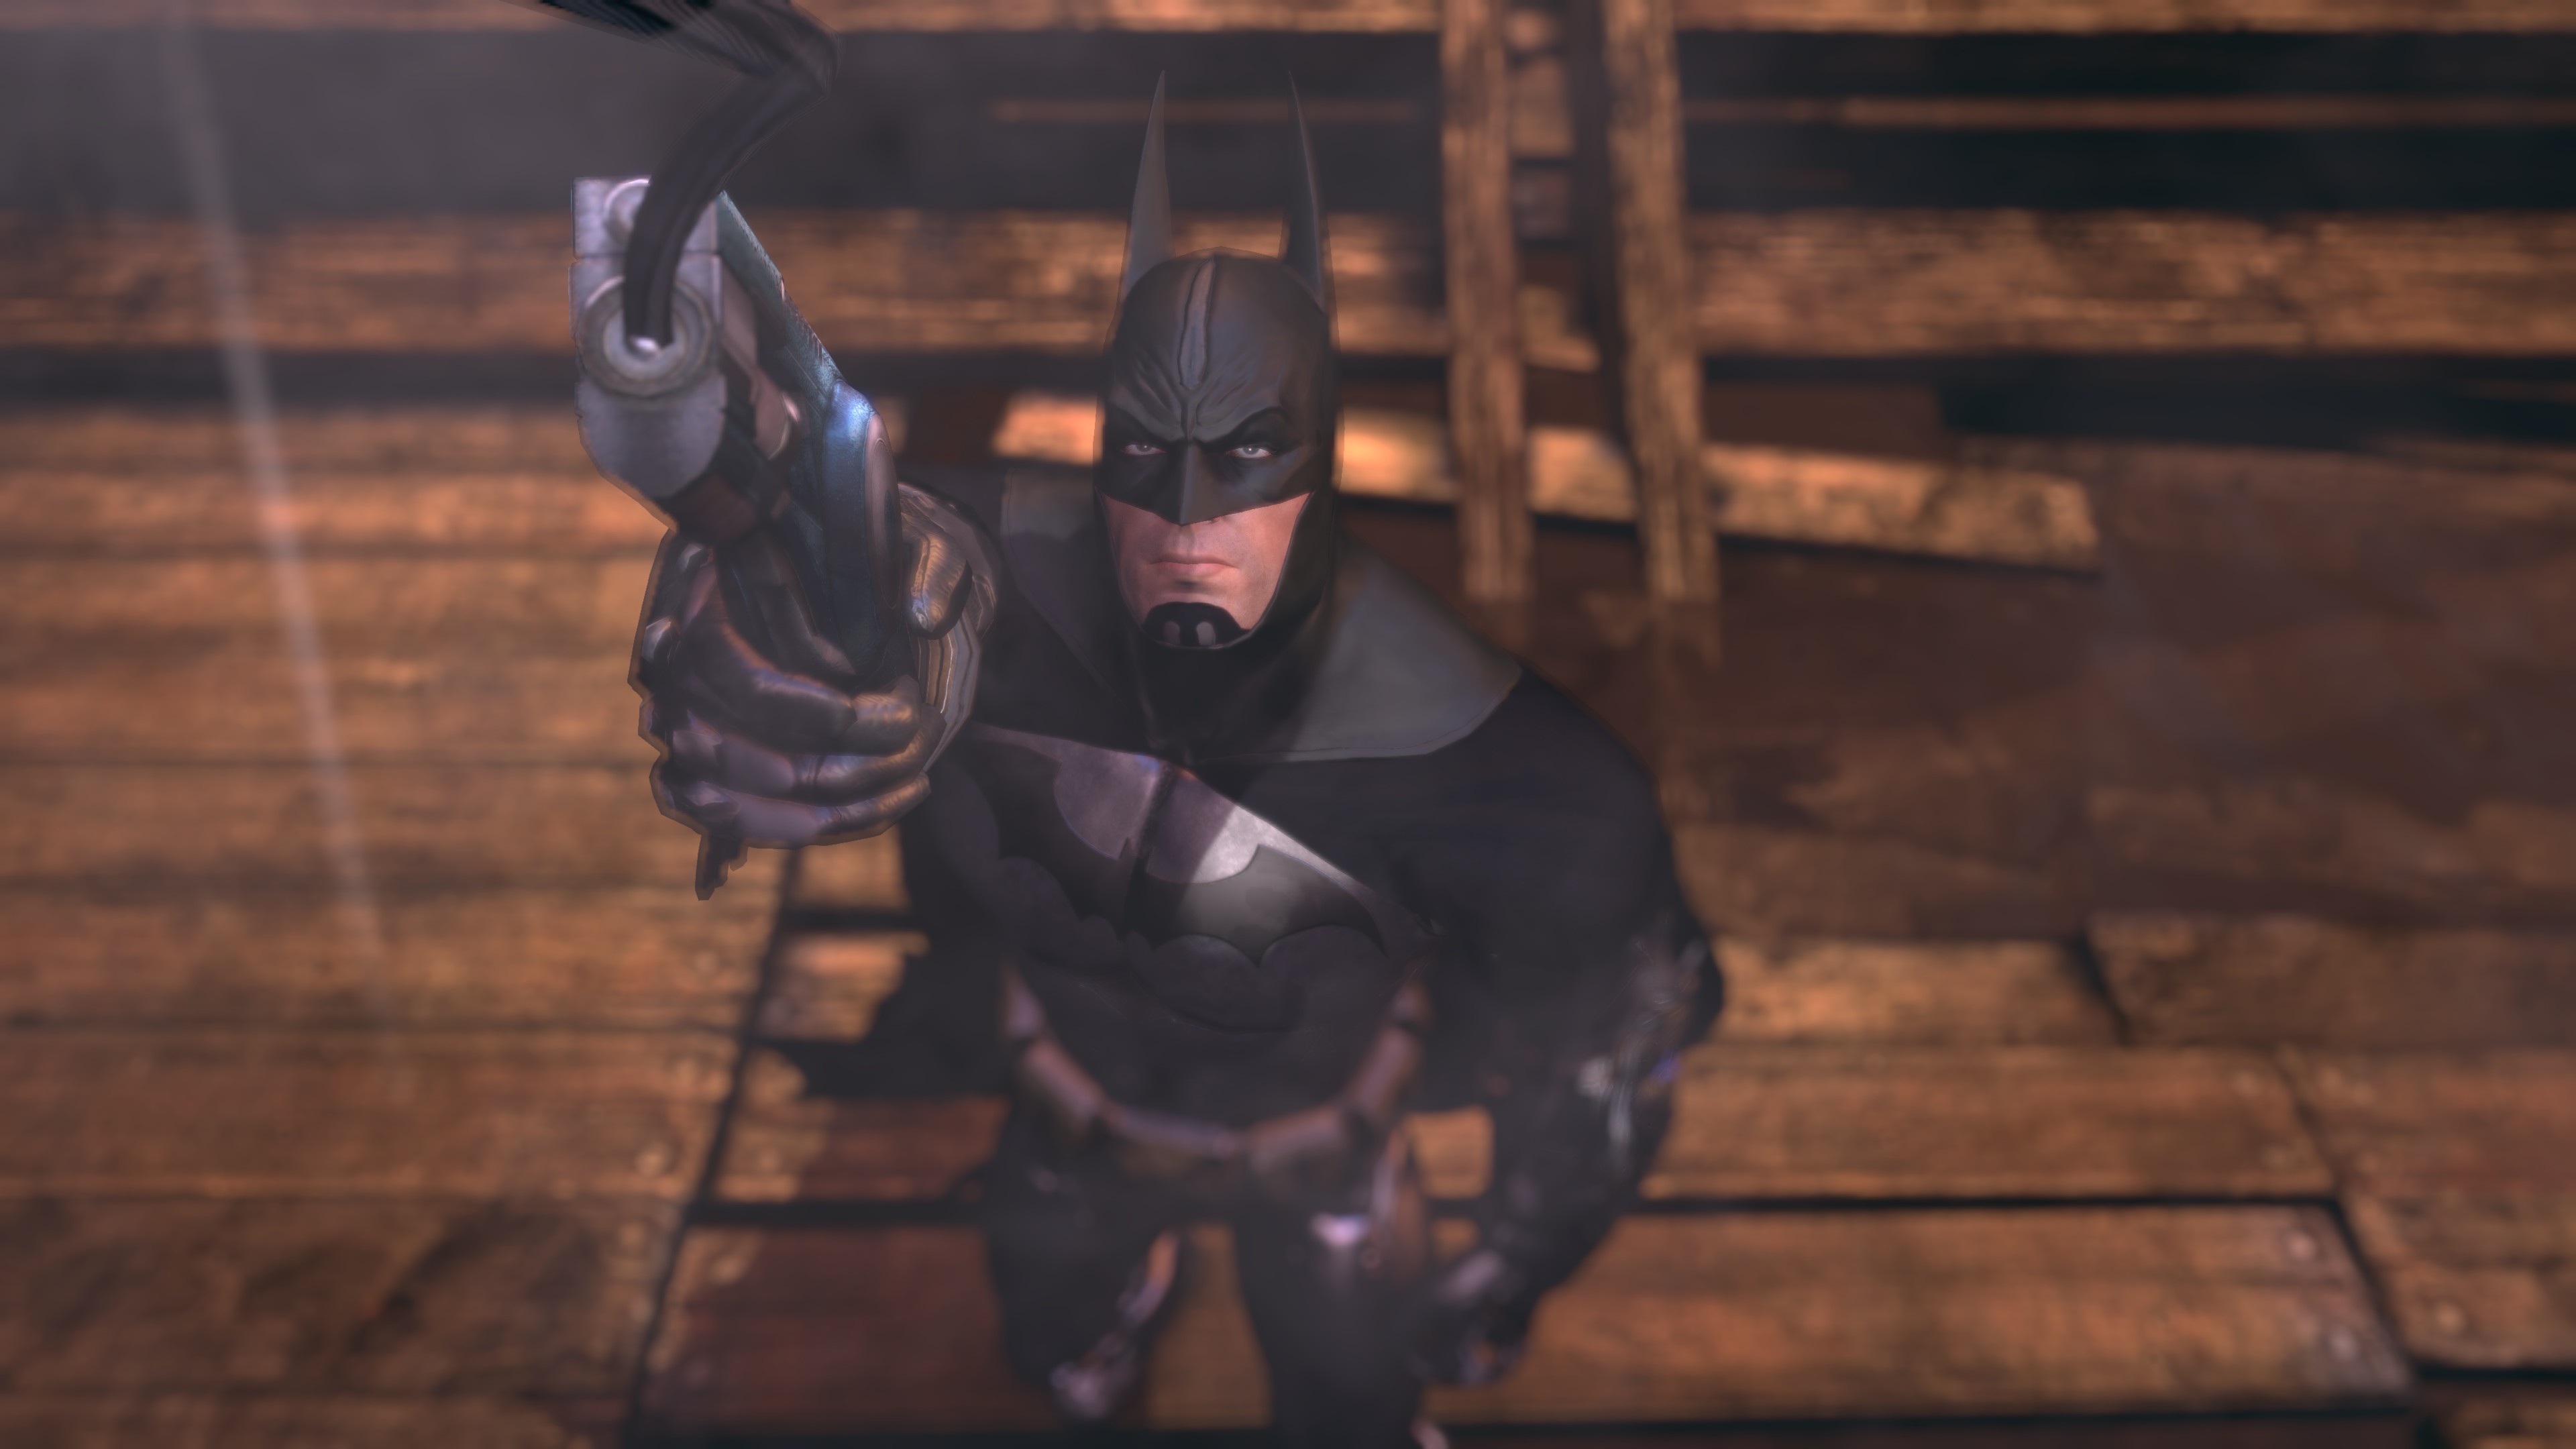 Armored Arkham Asylum Batsuit [Batman: Arkham City] [Mods]